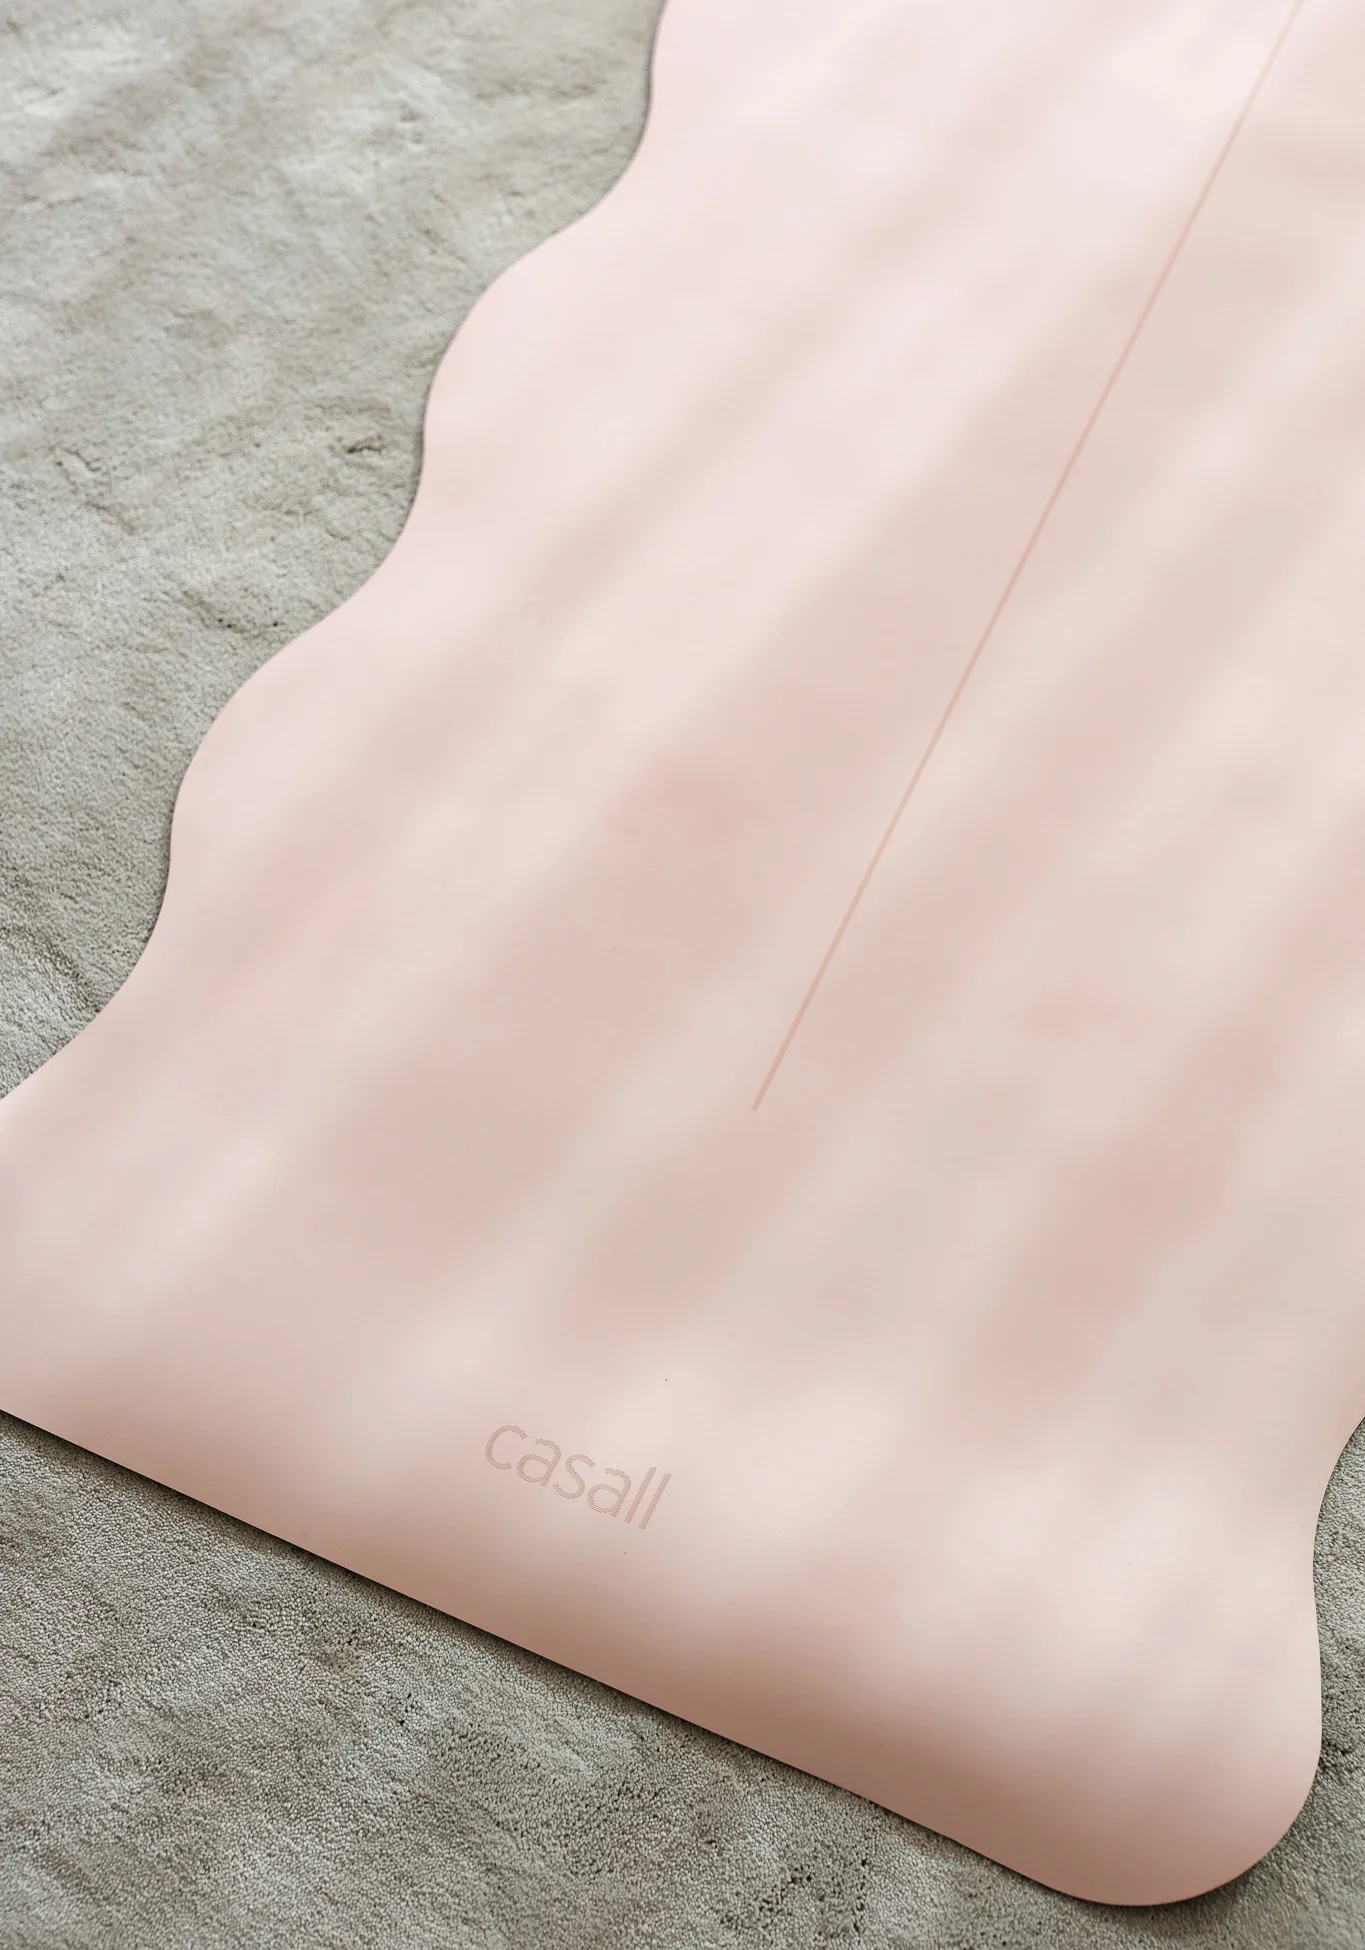 Yoga mat Grip&Cushion III Scallop 5mm Light pink - 0tkrhlmq